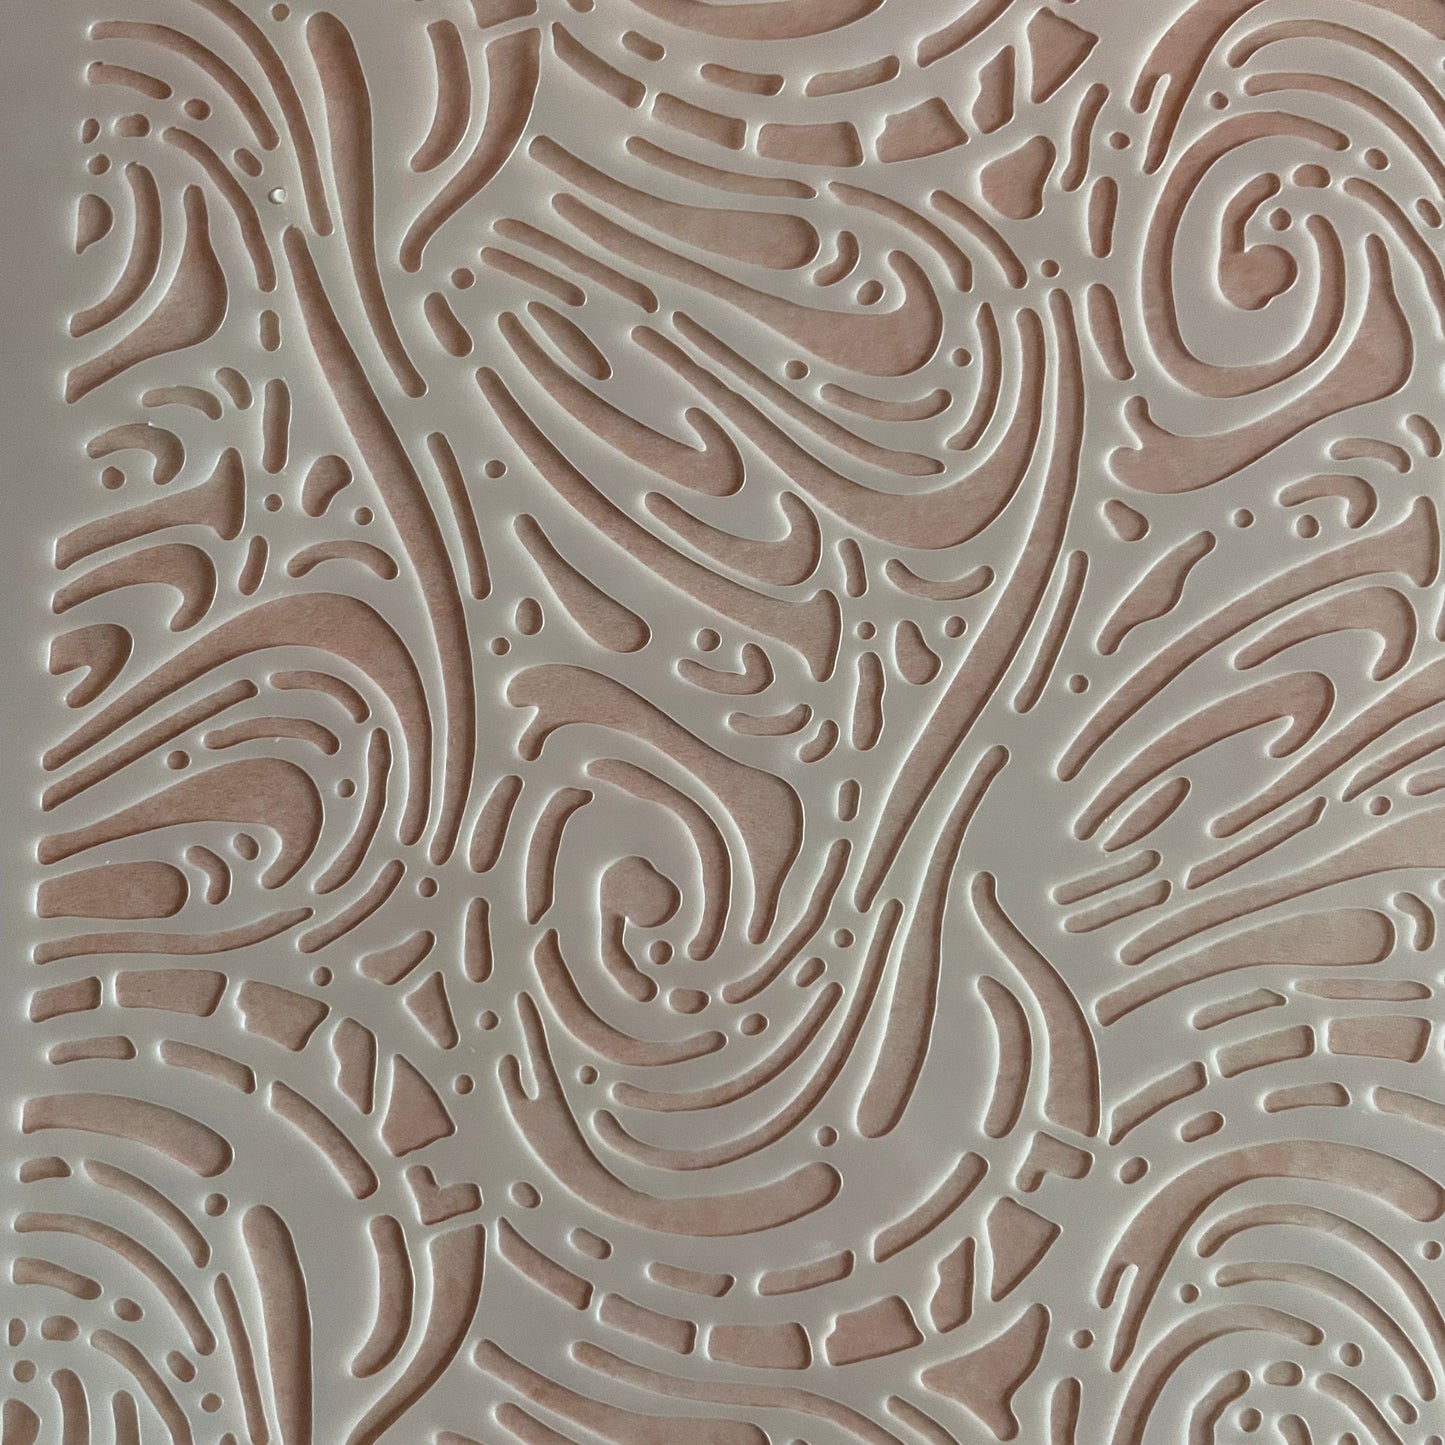 Fingerprint Swirling stencil polymer clay trinket dish